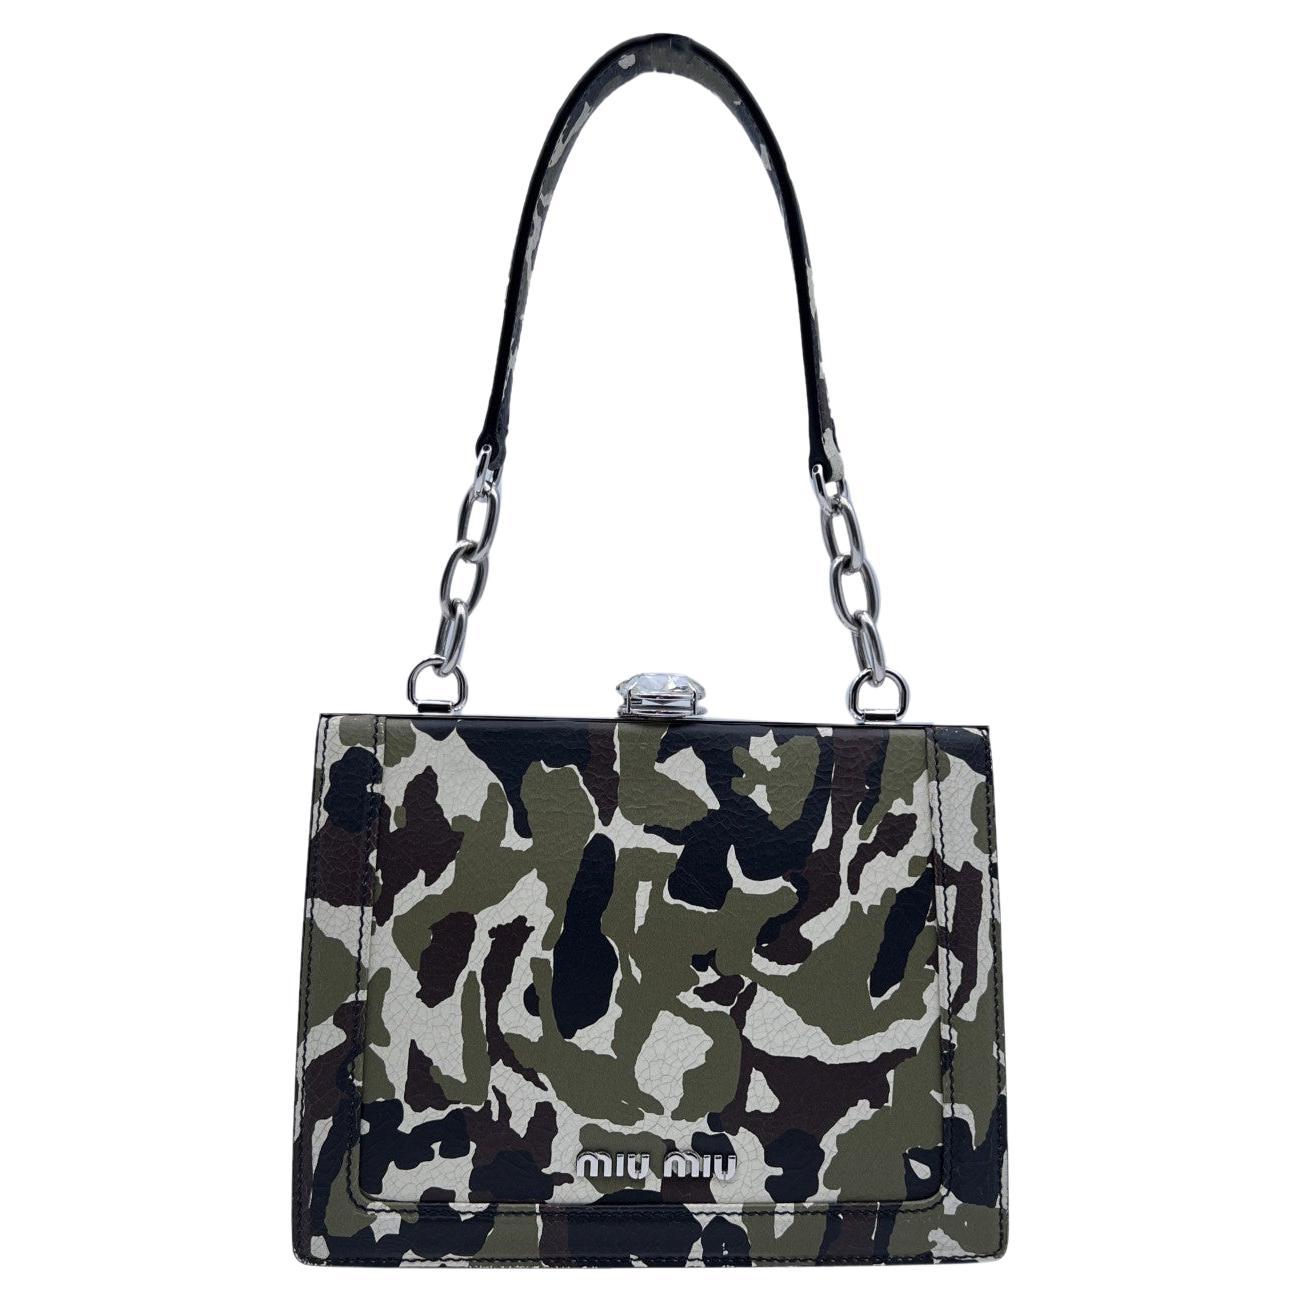 Miu Miu Military Green Camouflage Print Leather Handbag with Crystal